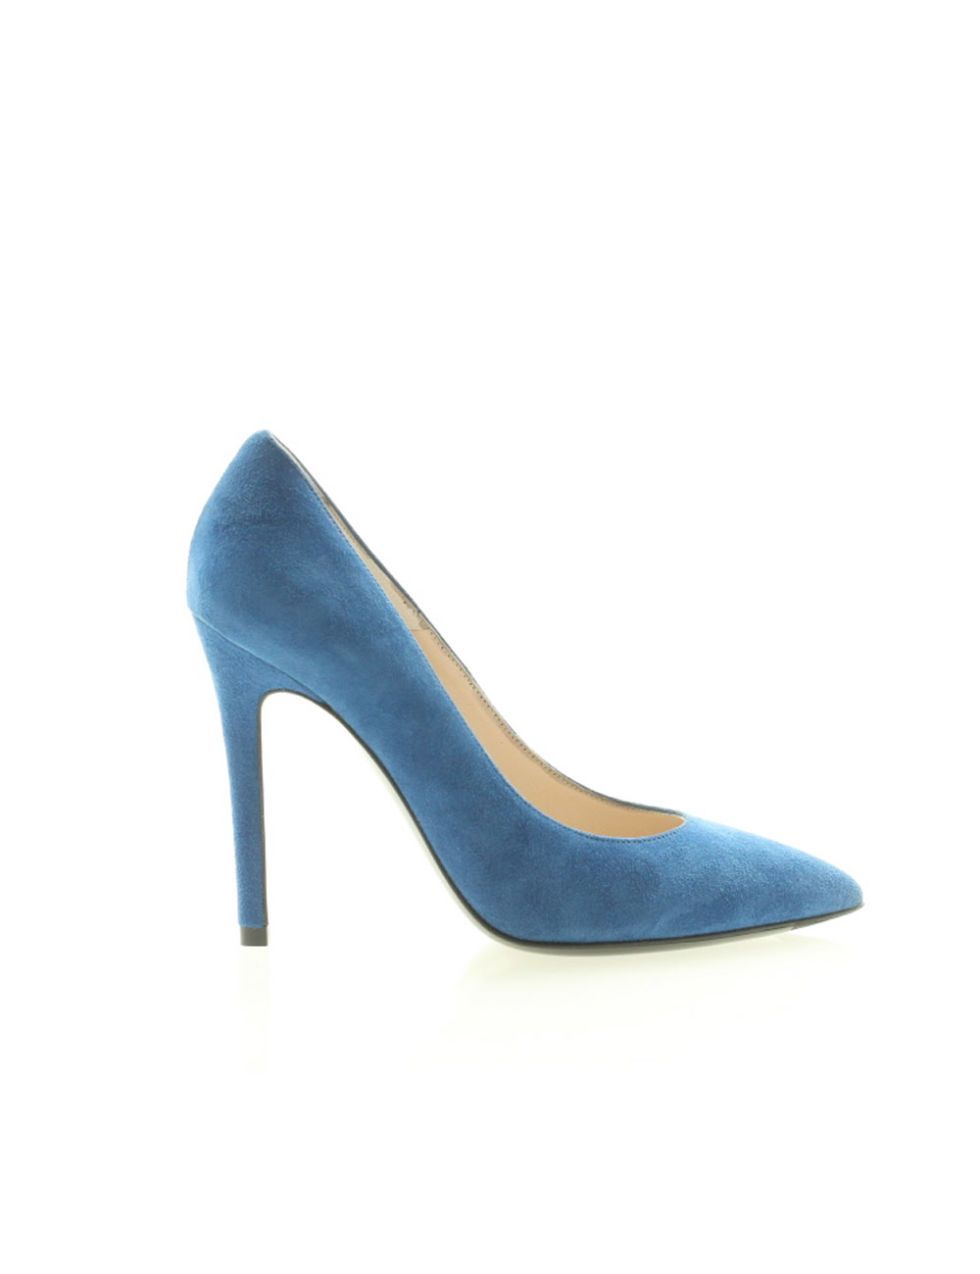 Footwear, Blue, High heels, Aqua, Basic pump, Electric blue, Teal, Azure, Beige, Tan, 